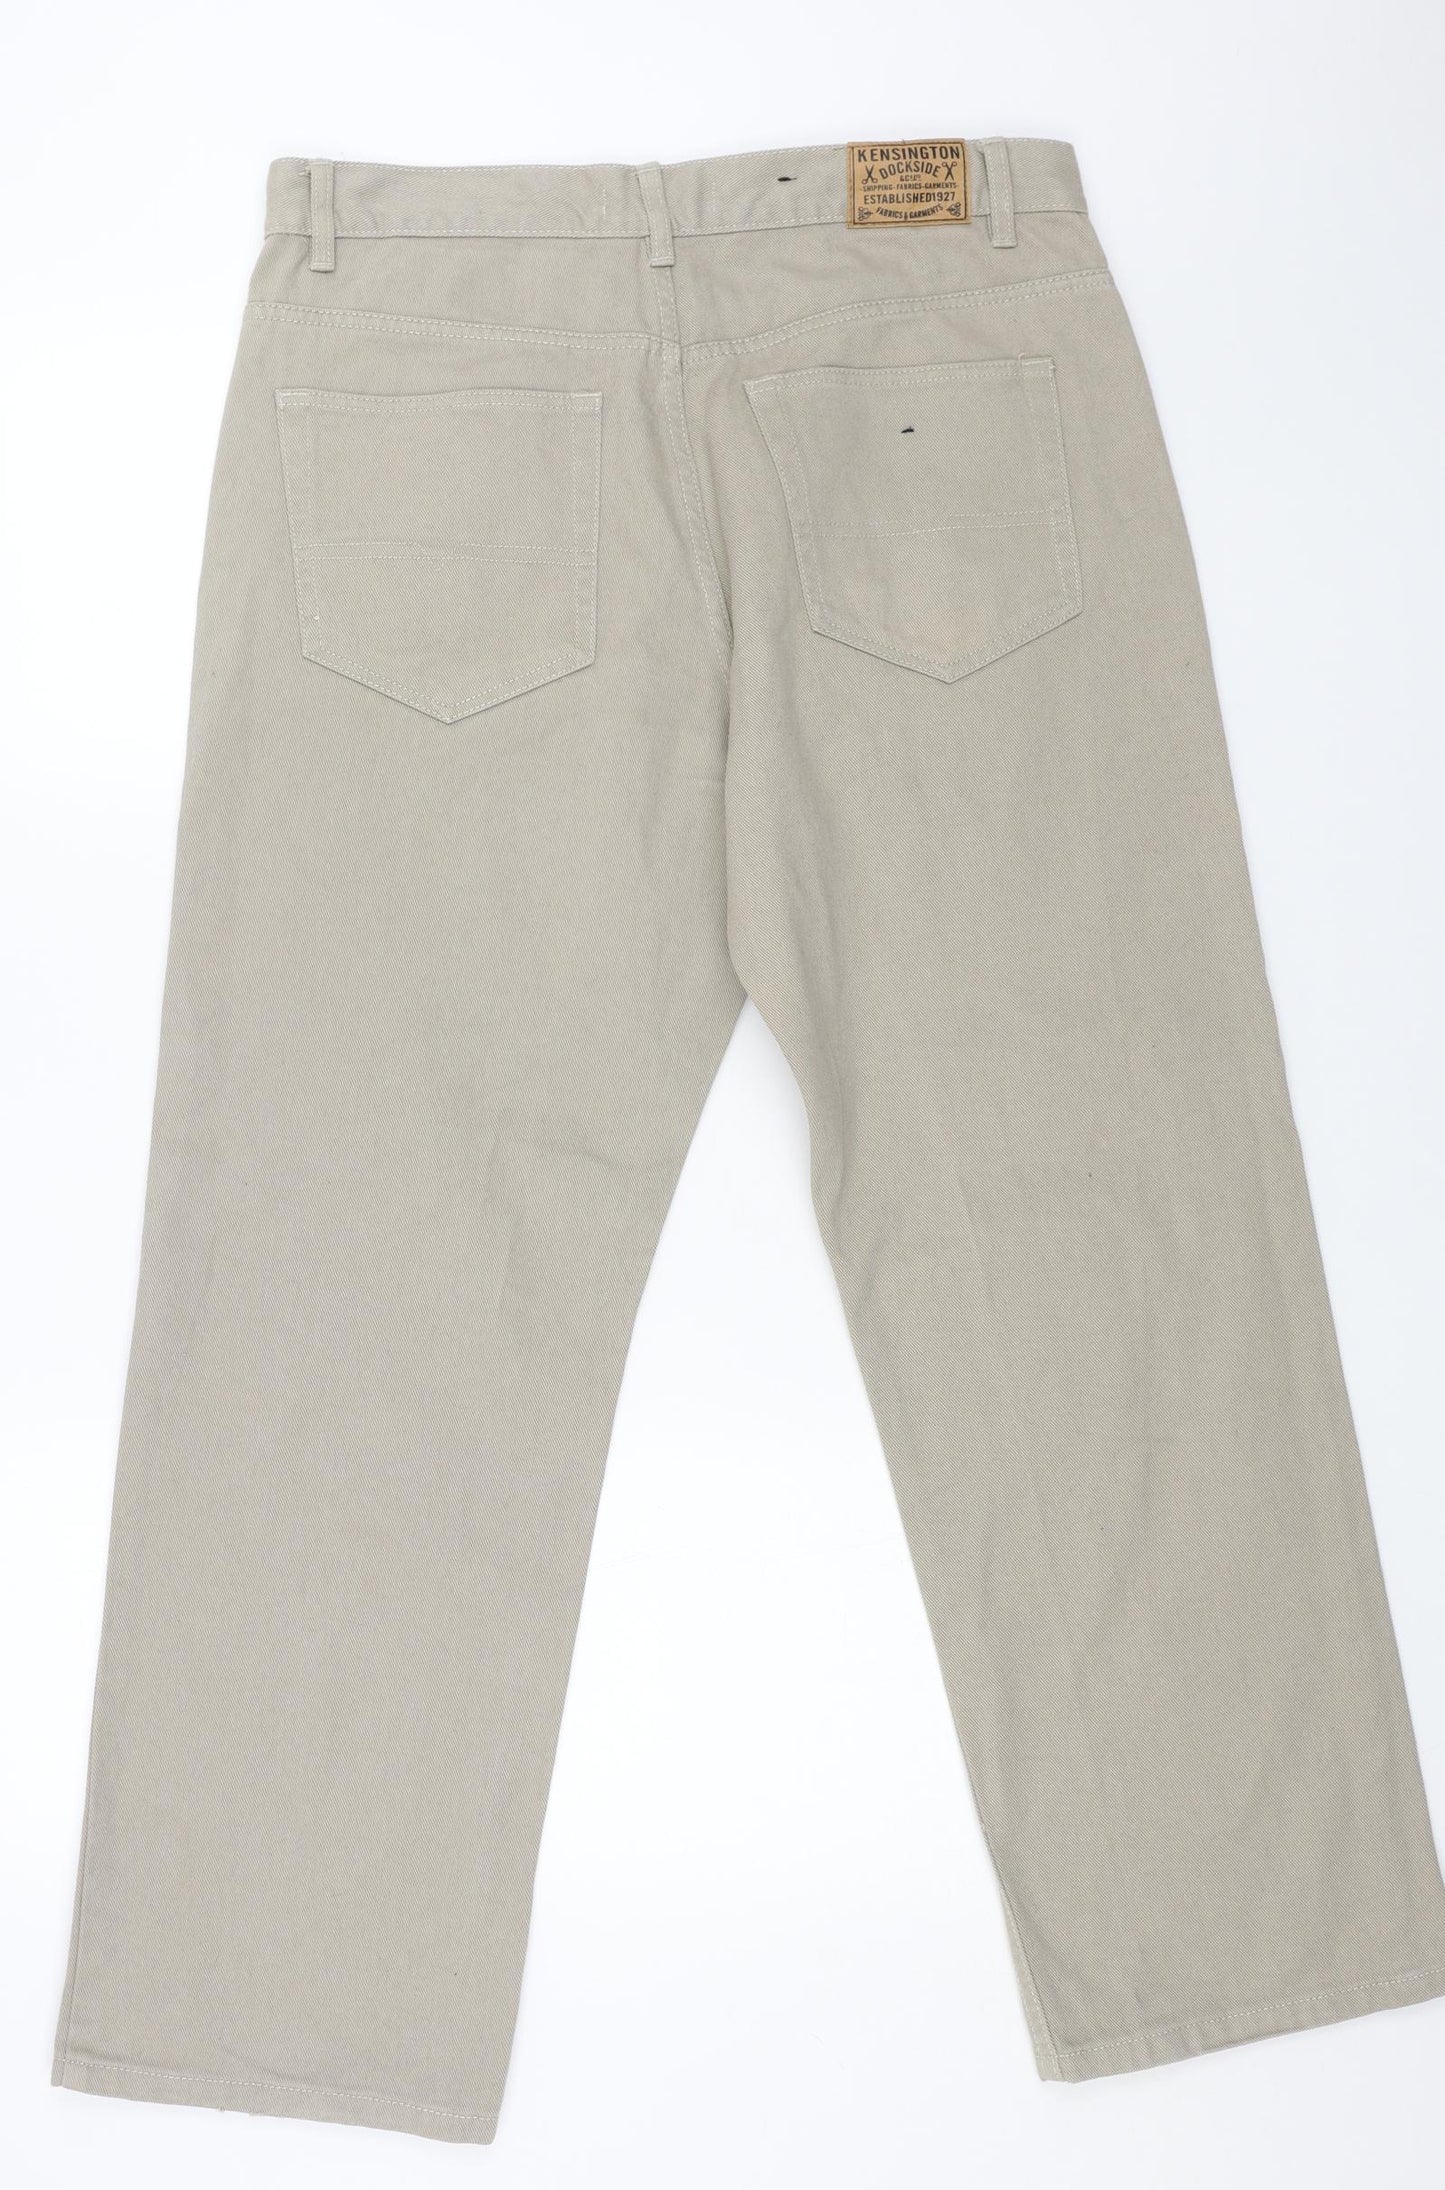 Kensington Mens Beige Cotton Straight Jeans Size 36 in L29 in Regular Button